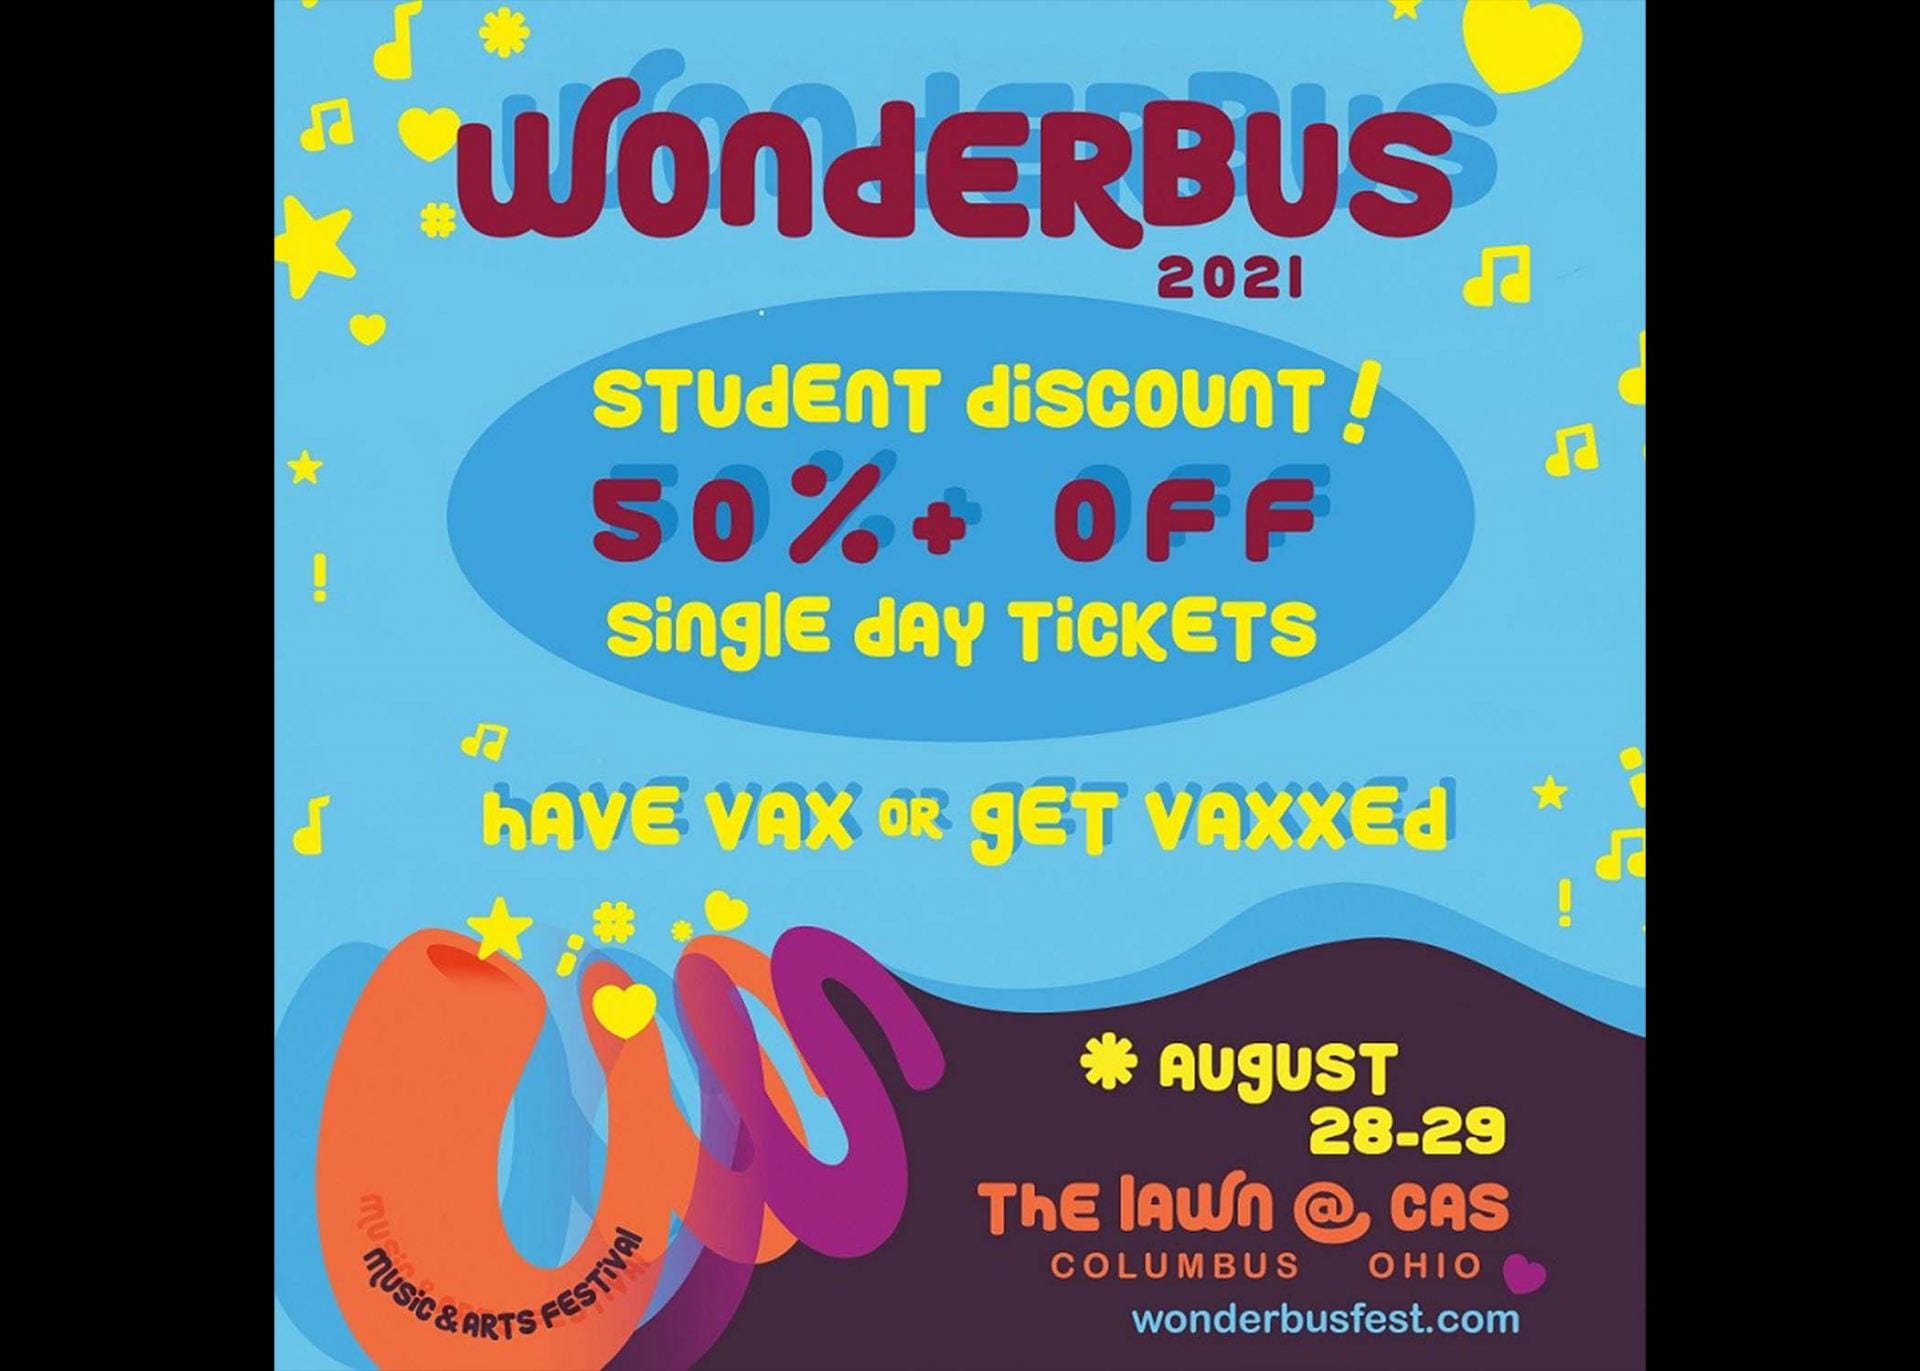 WonderBus info poster